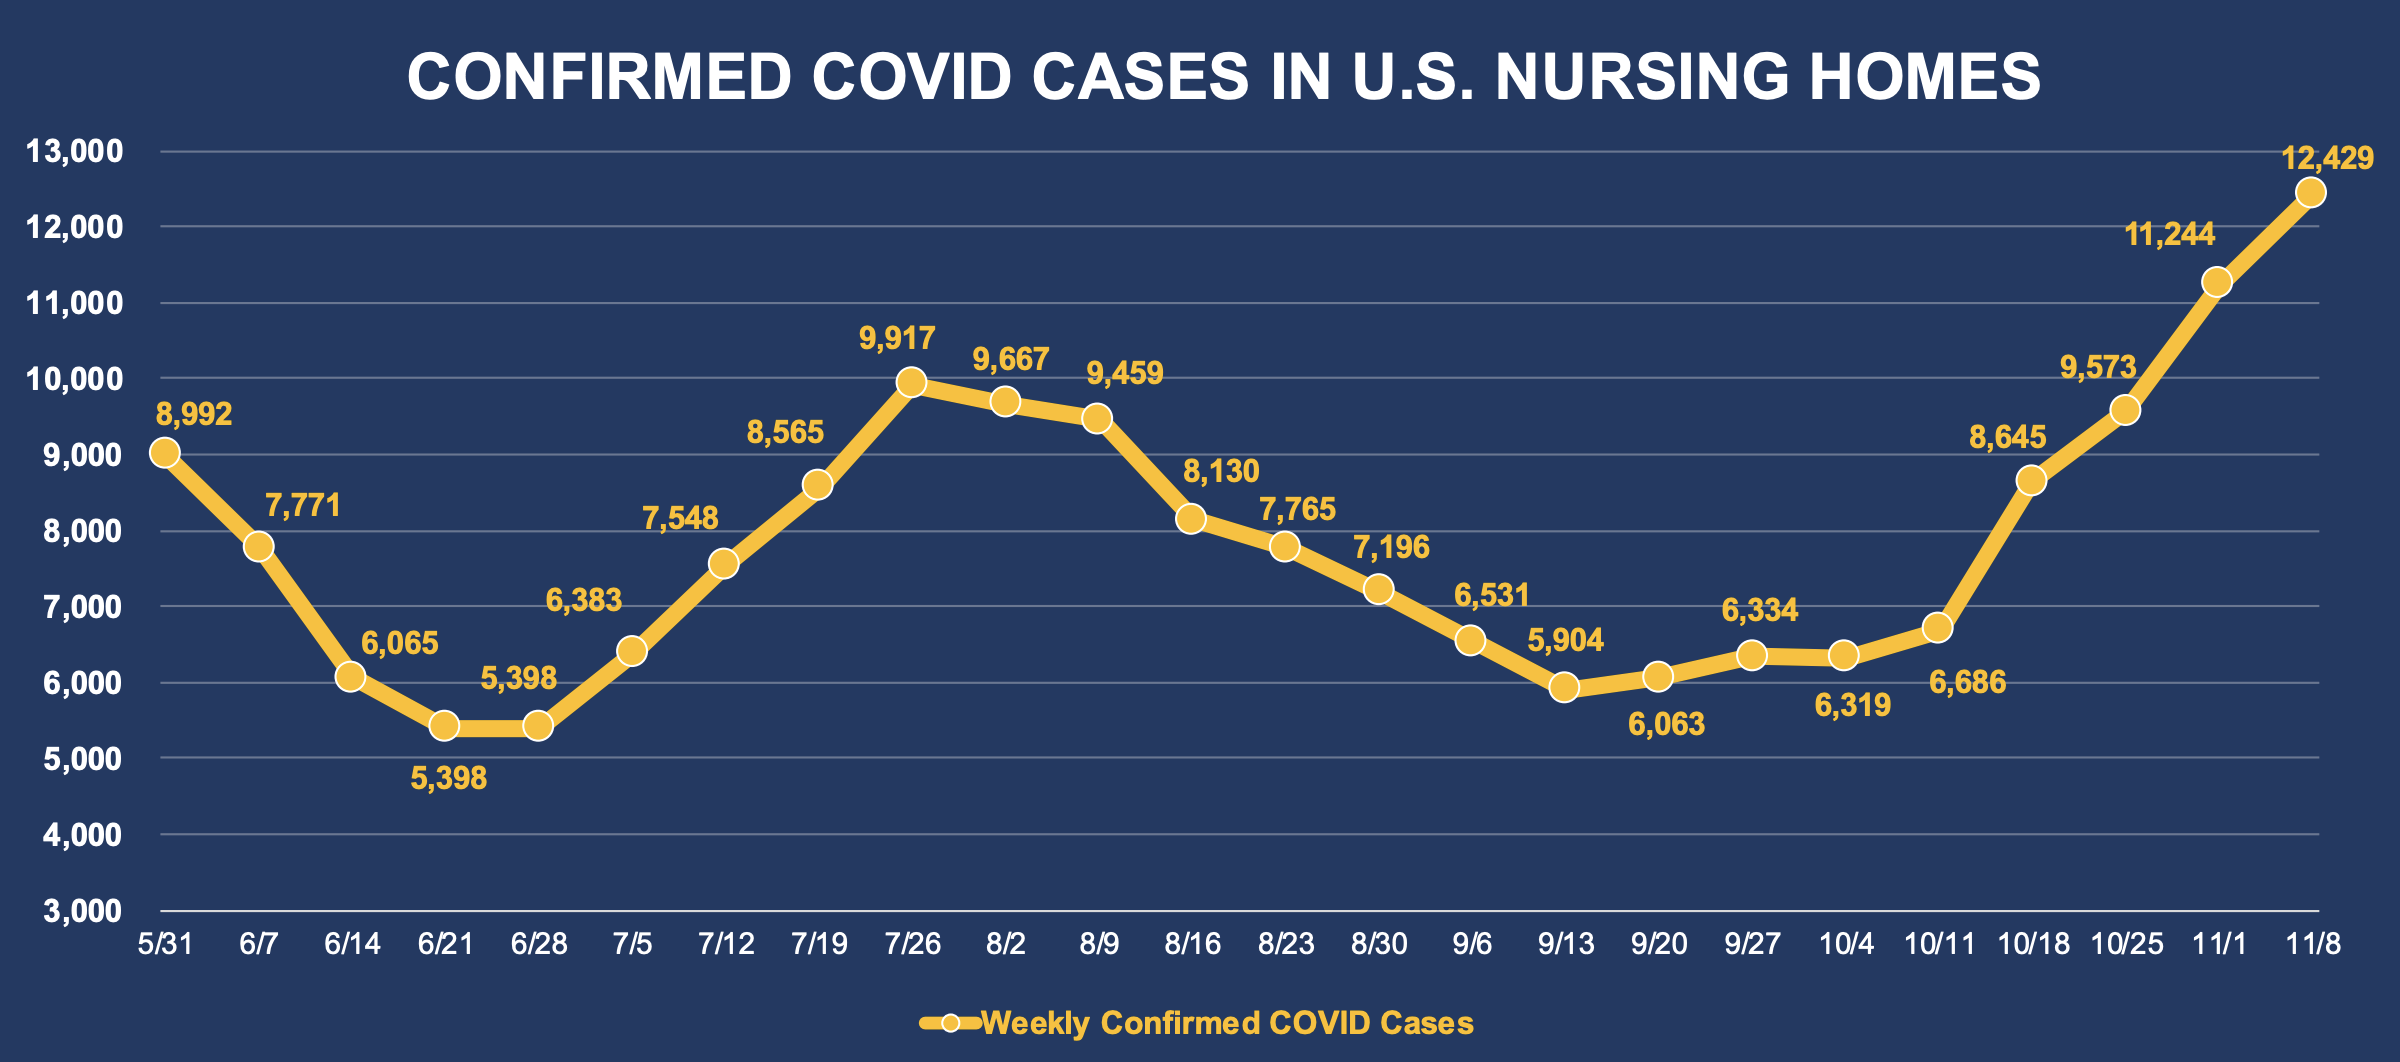 Confirmed COVID Cases In U.S. Nursing Homes